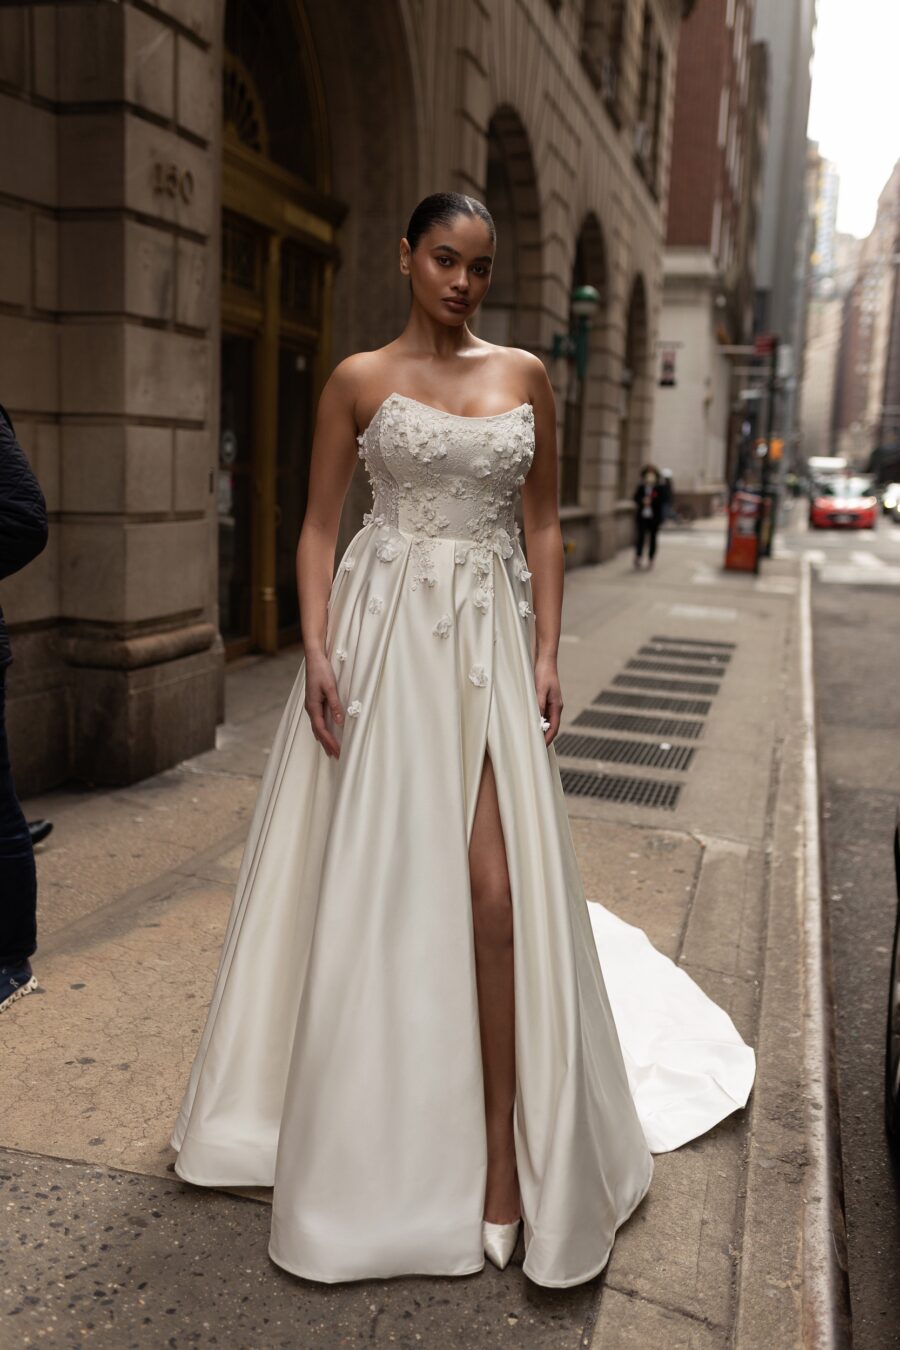 Libby 1 wedding dress by woná concept from urban elegance